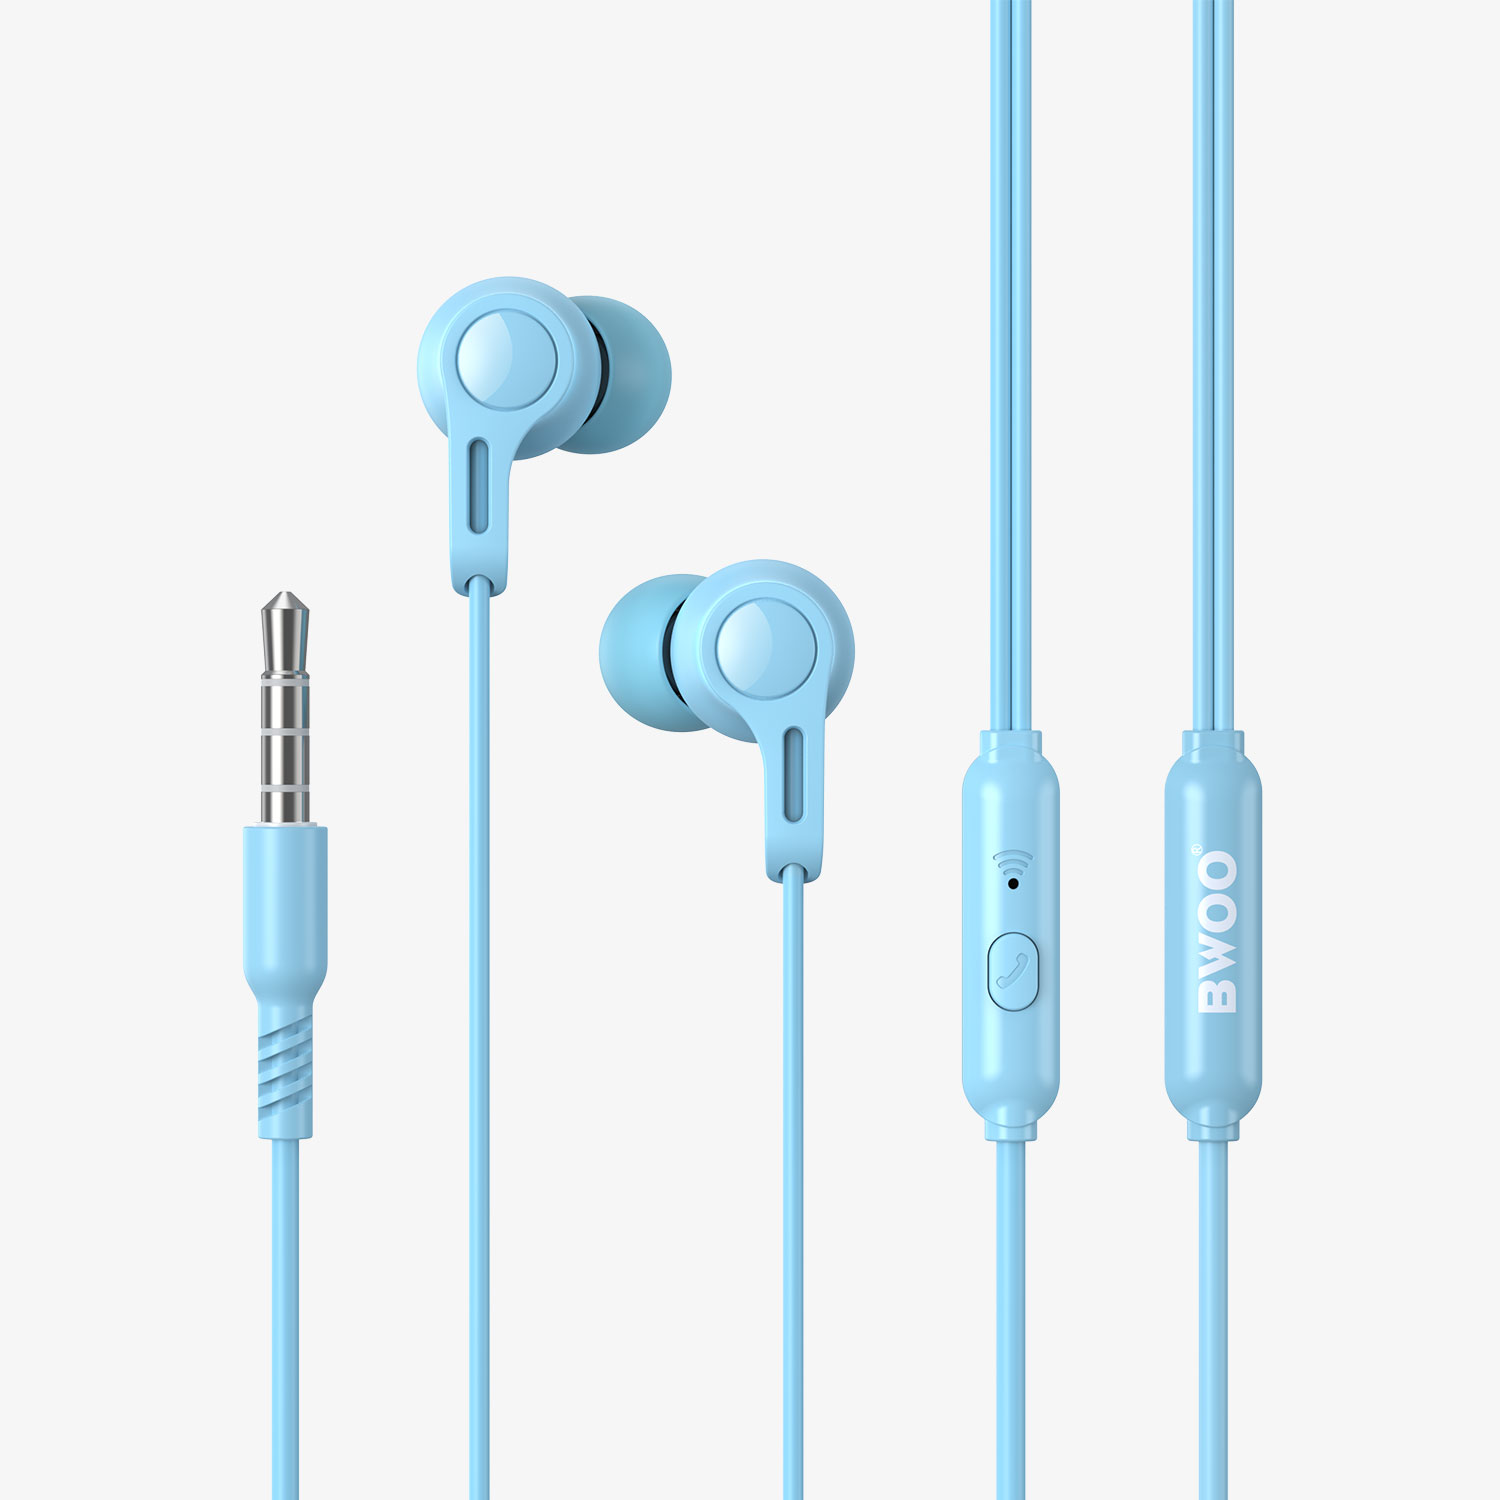 Macaron color wired earphones